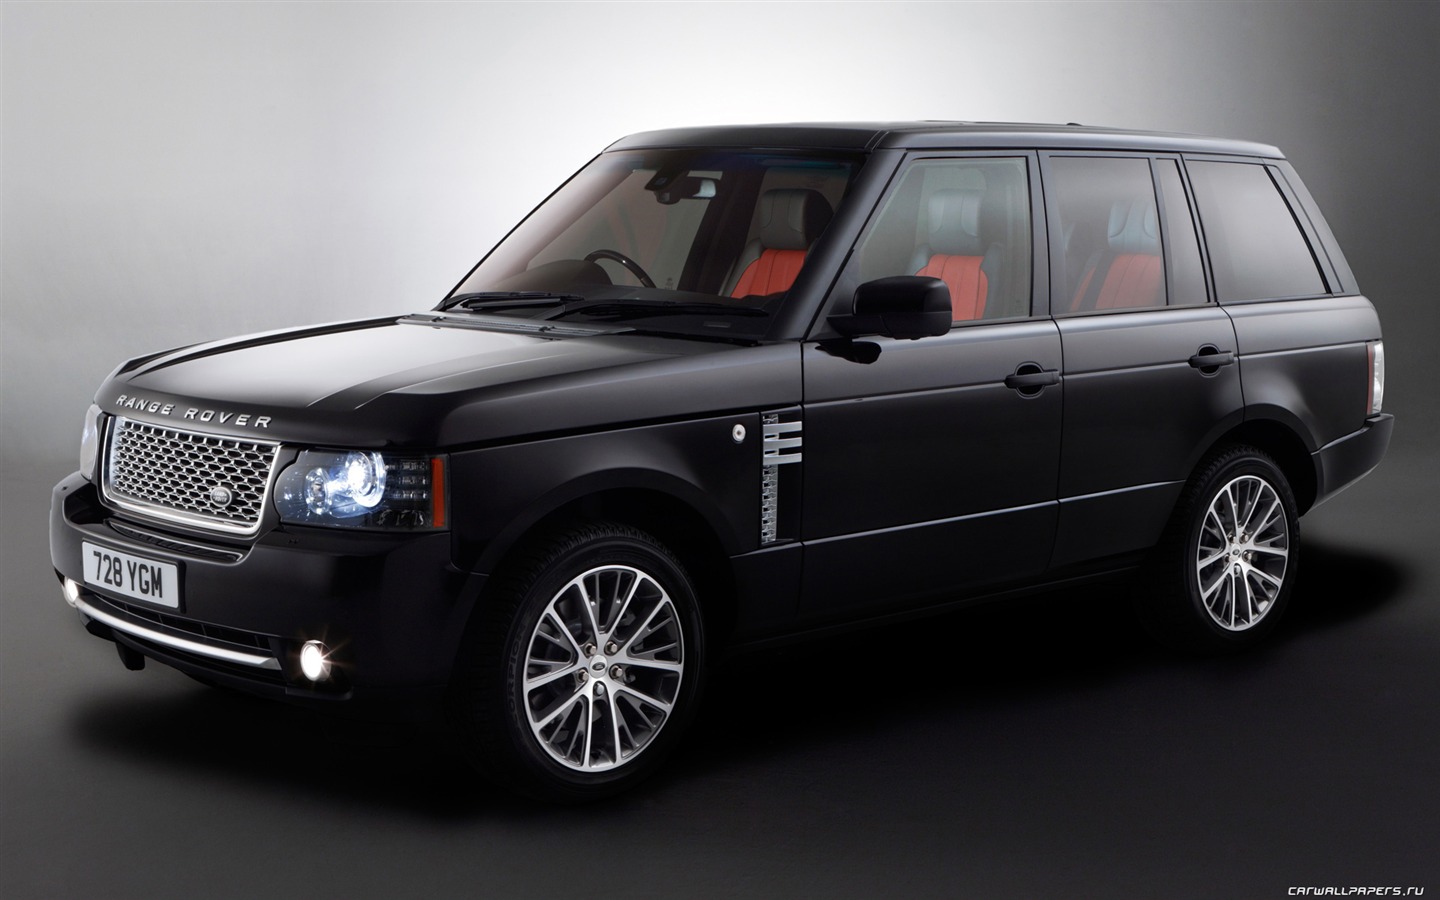 Land Rover Range Rover Black Edition - 2011 路虎18 - 1440x900